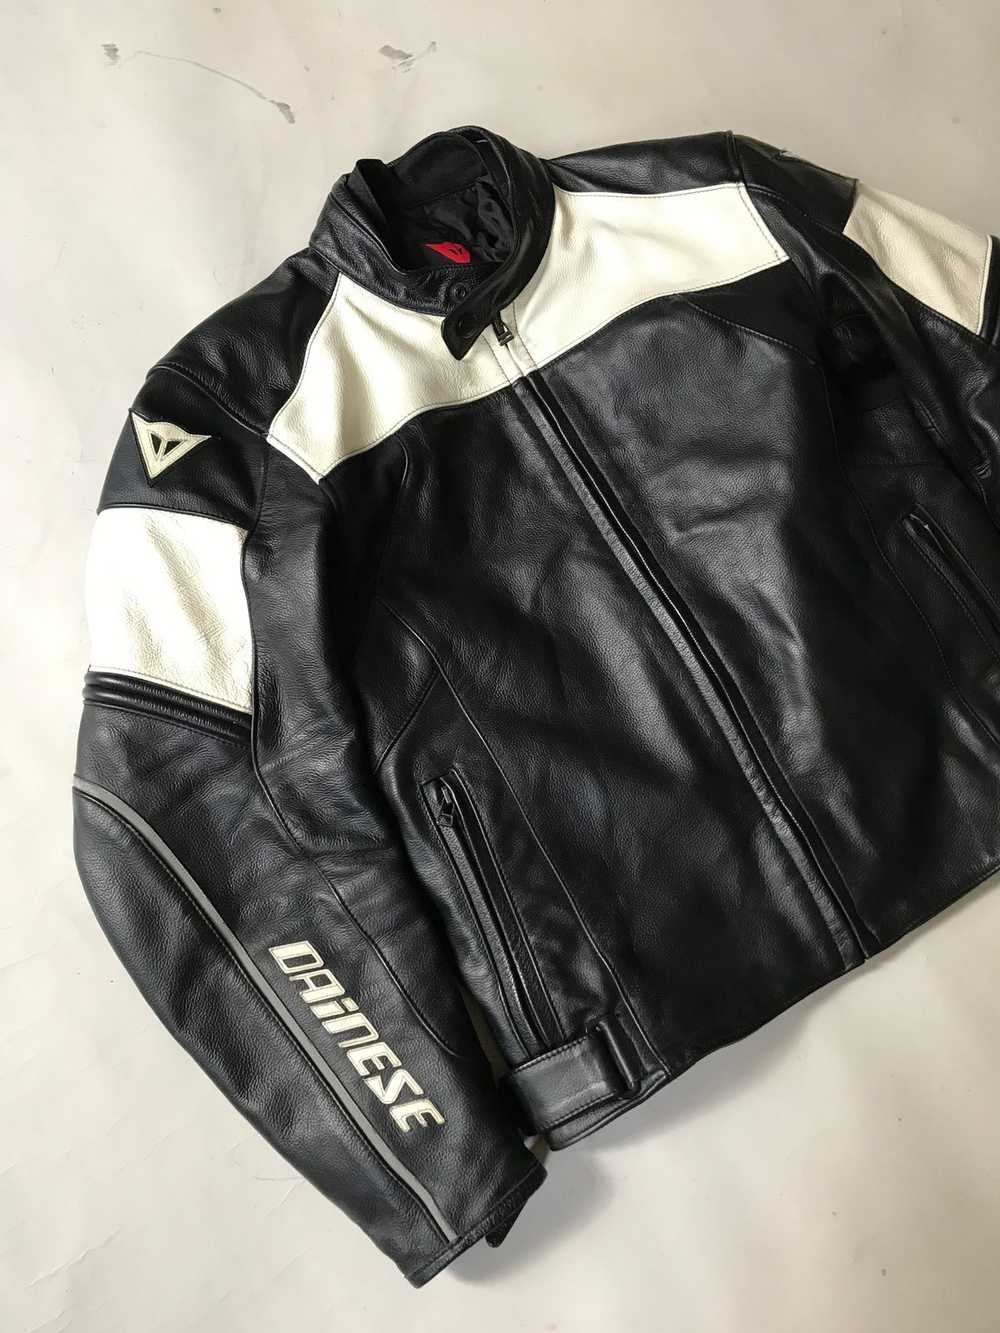 Dainese Dainese Two Tone Leather Motorcycle Jacket - image 4